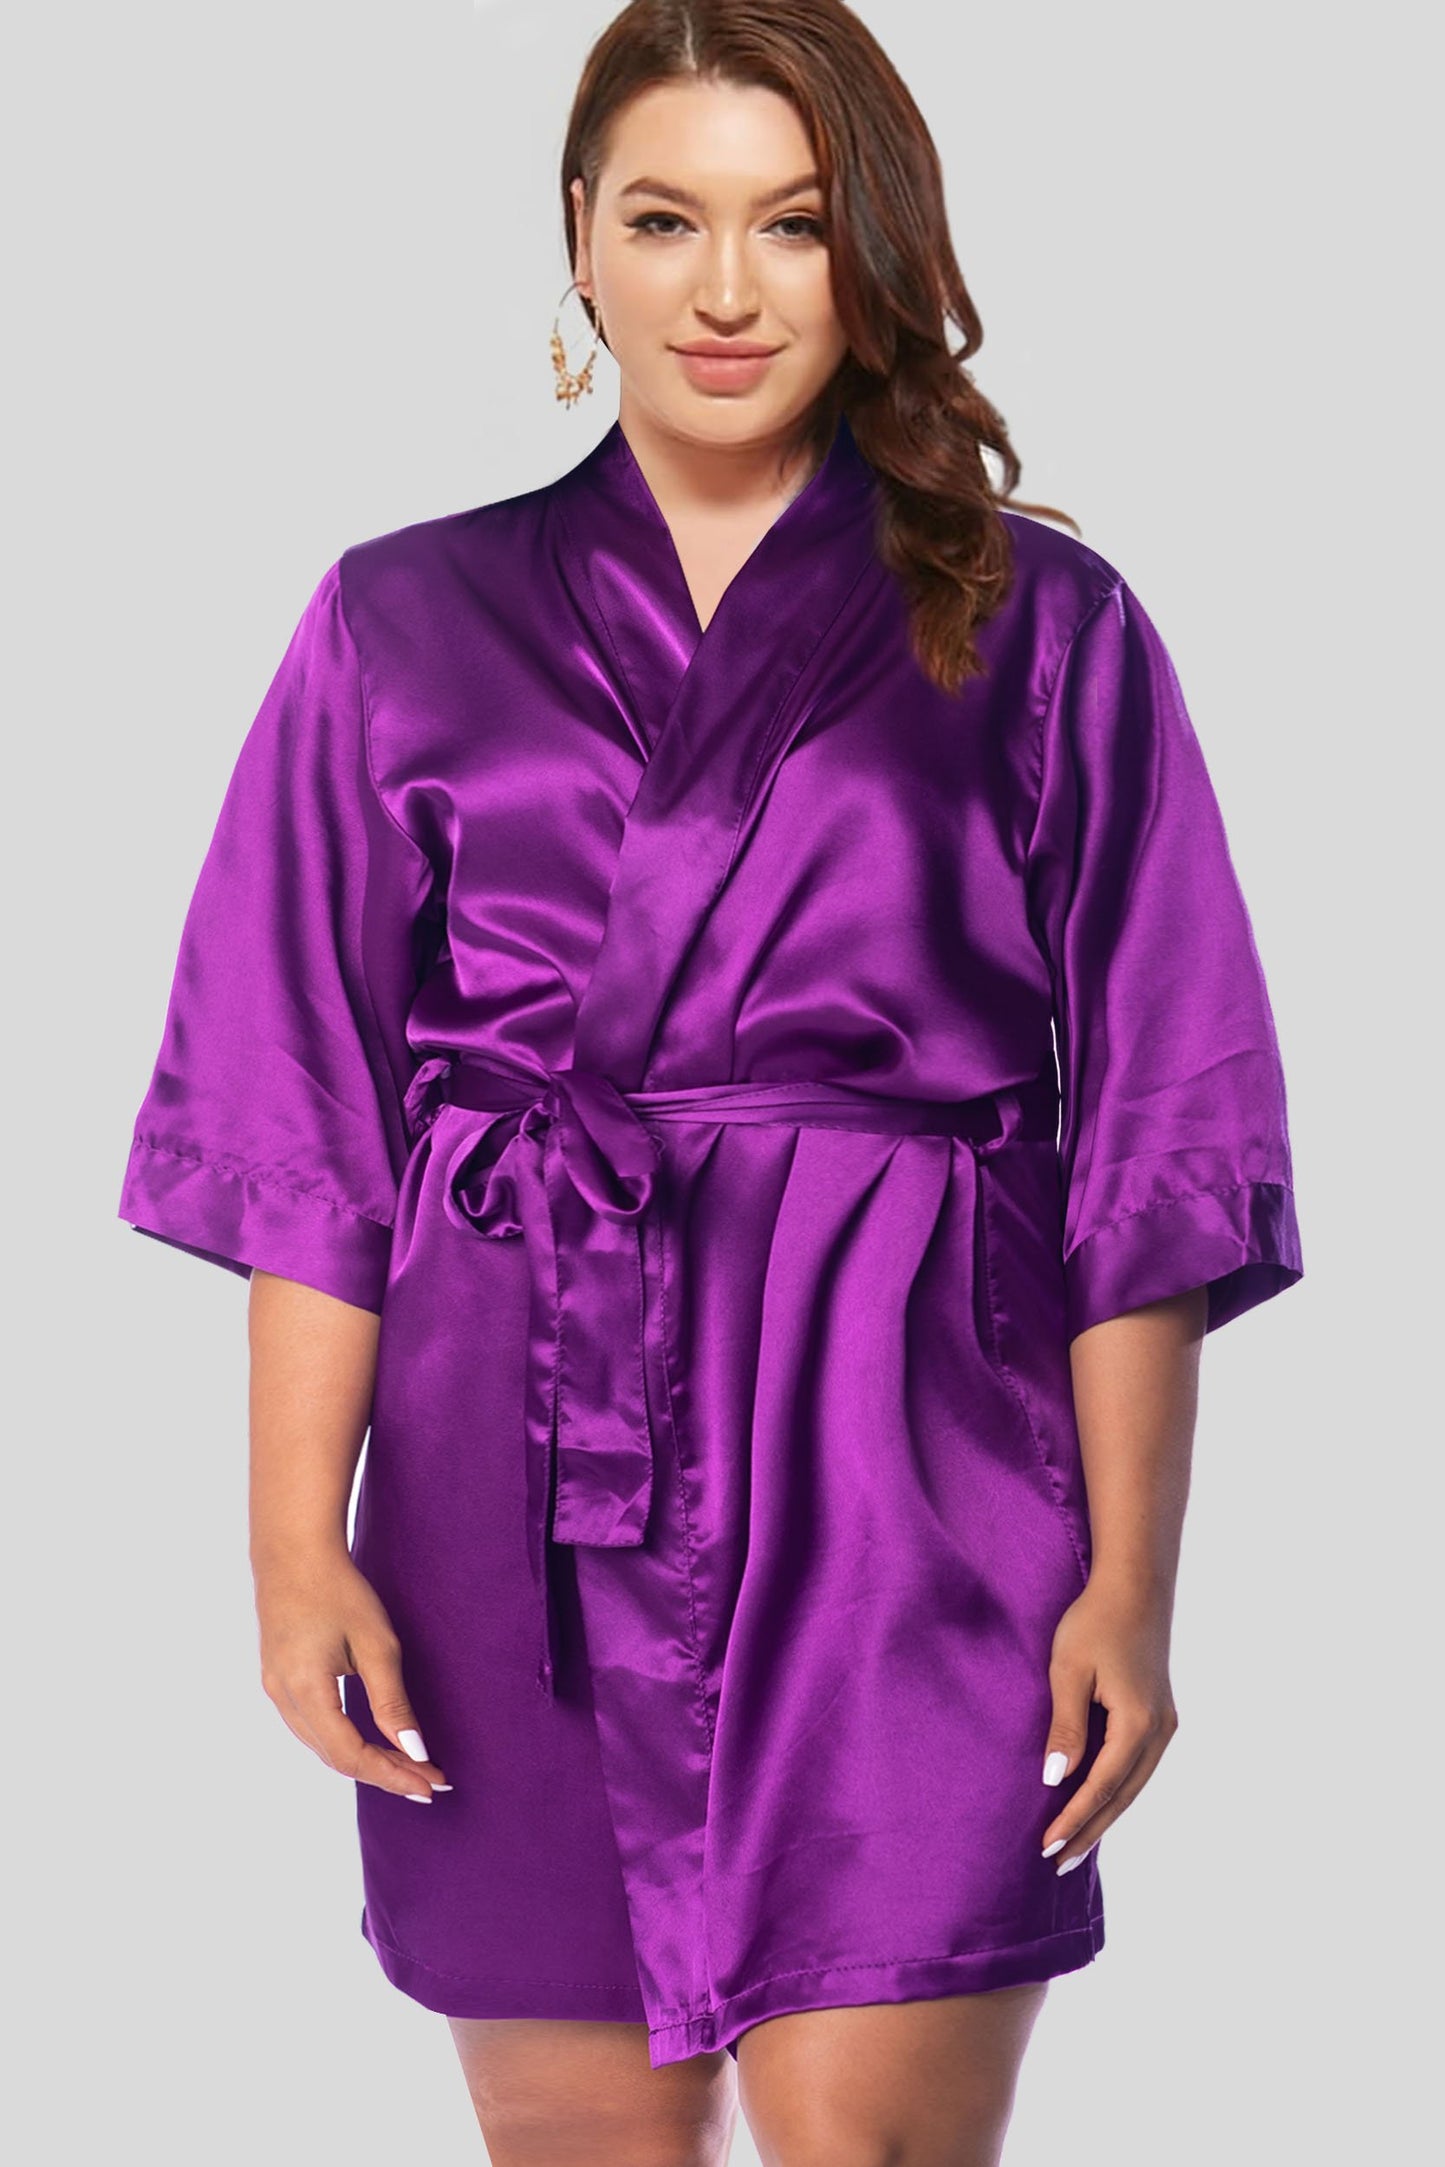 Egg Plant Satin Kimono Robe Plus Size - Purple Bridal Robe - Bridal Robe - Bridesmaid Robe - Purple Robe - PrettyRobes